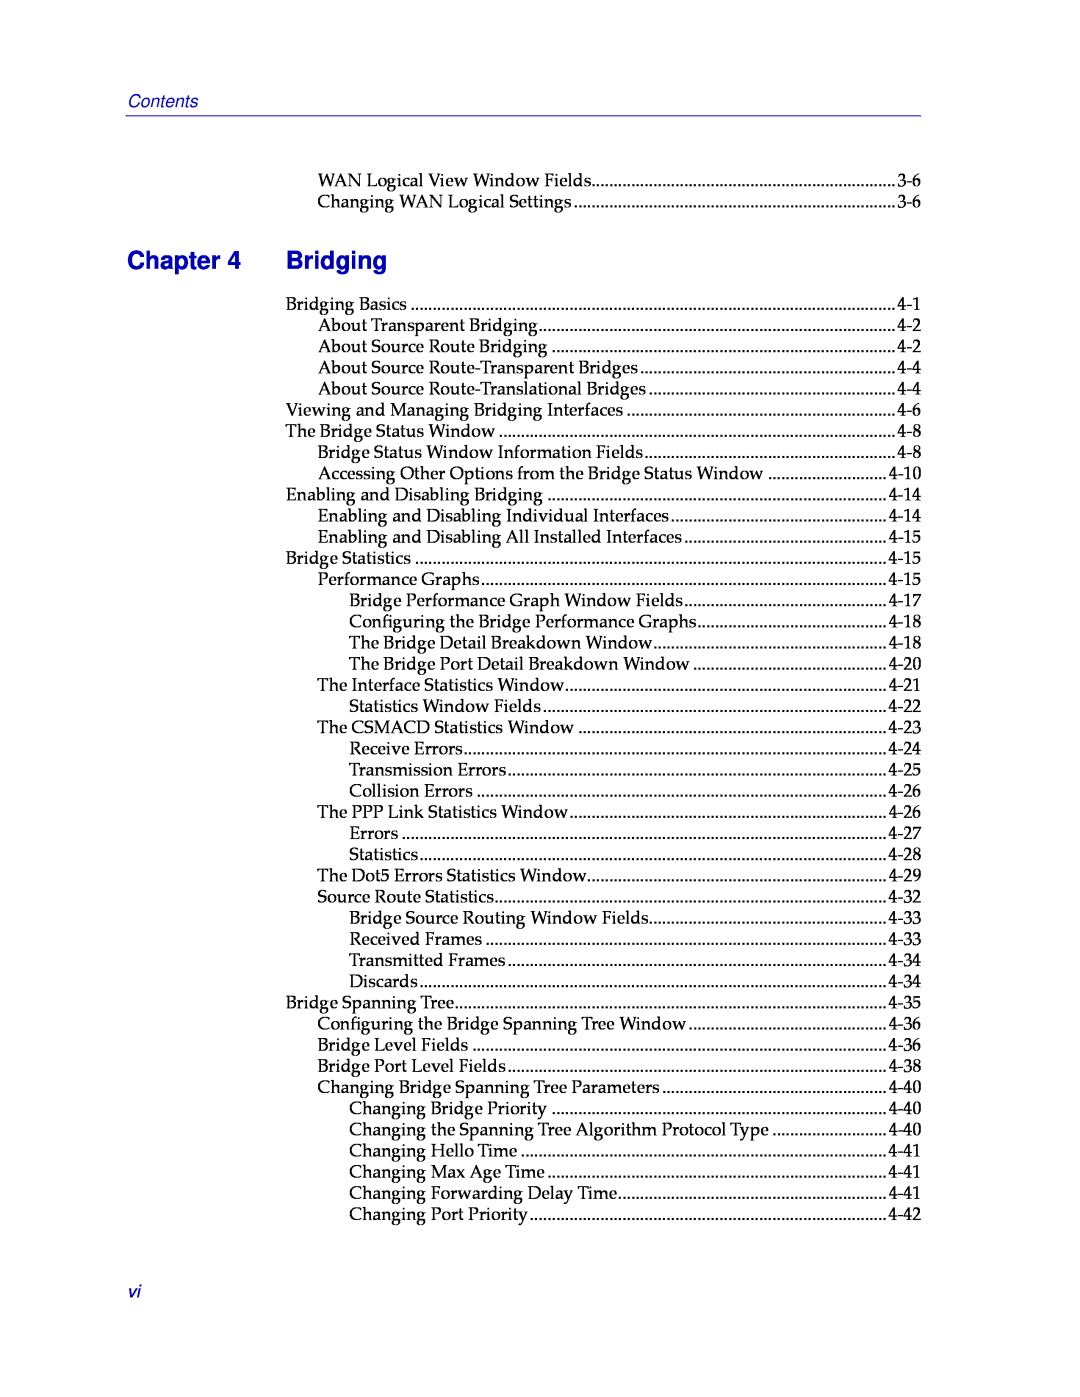 Cabletron Systems CSX400, CSX200 manual Bridging, Contents, Chapter 